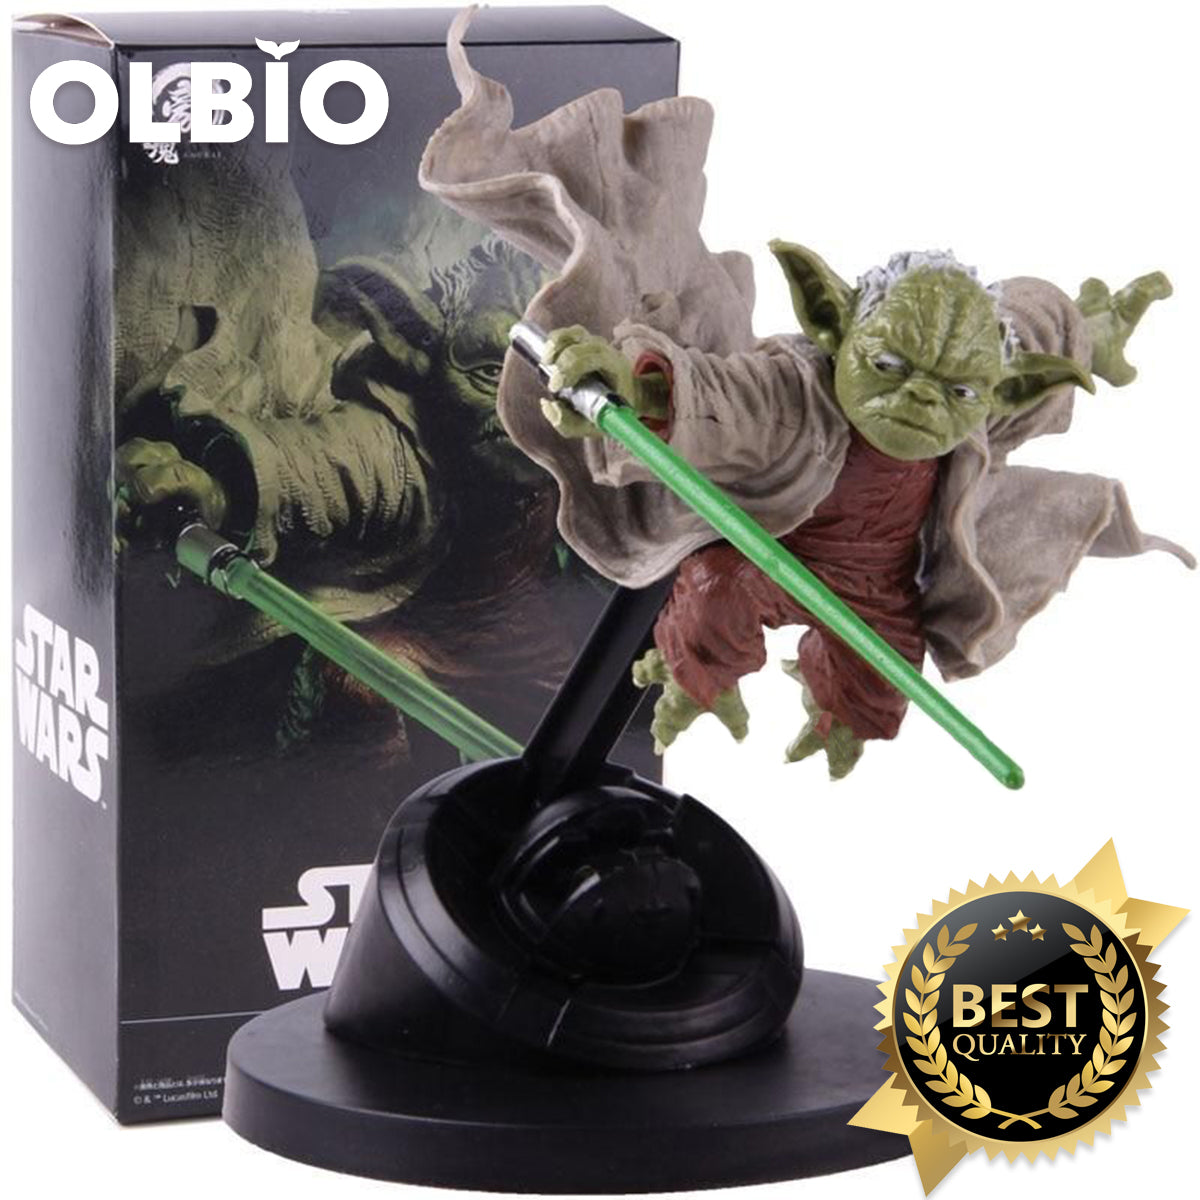 OLBIO Star Wars Master Yoda Jedi Knight Fighting Version PVC Master Action Figure